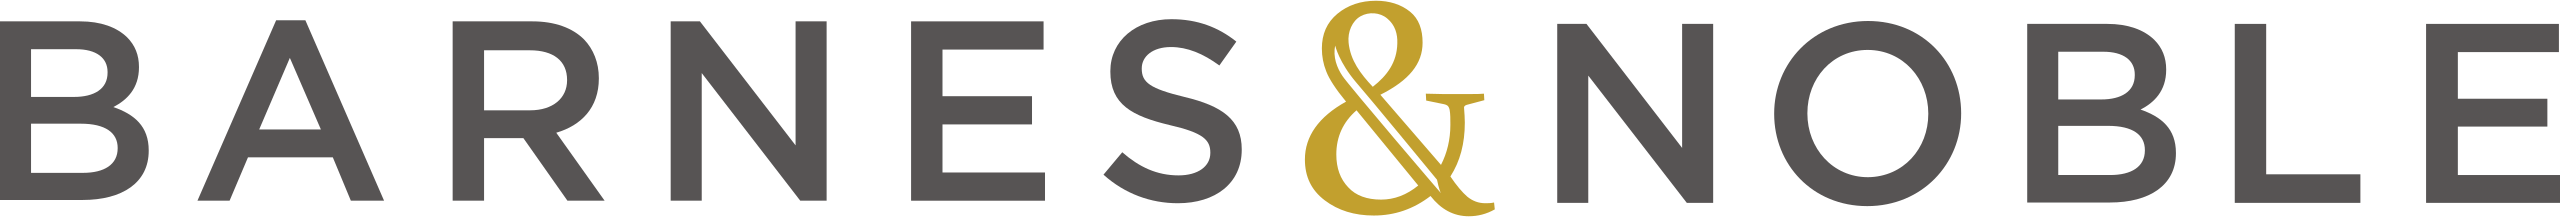 Barnes_&_Noble_logo_(2021).svg